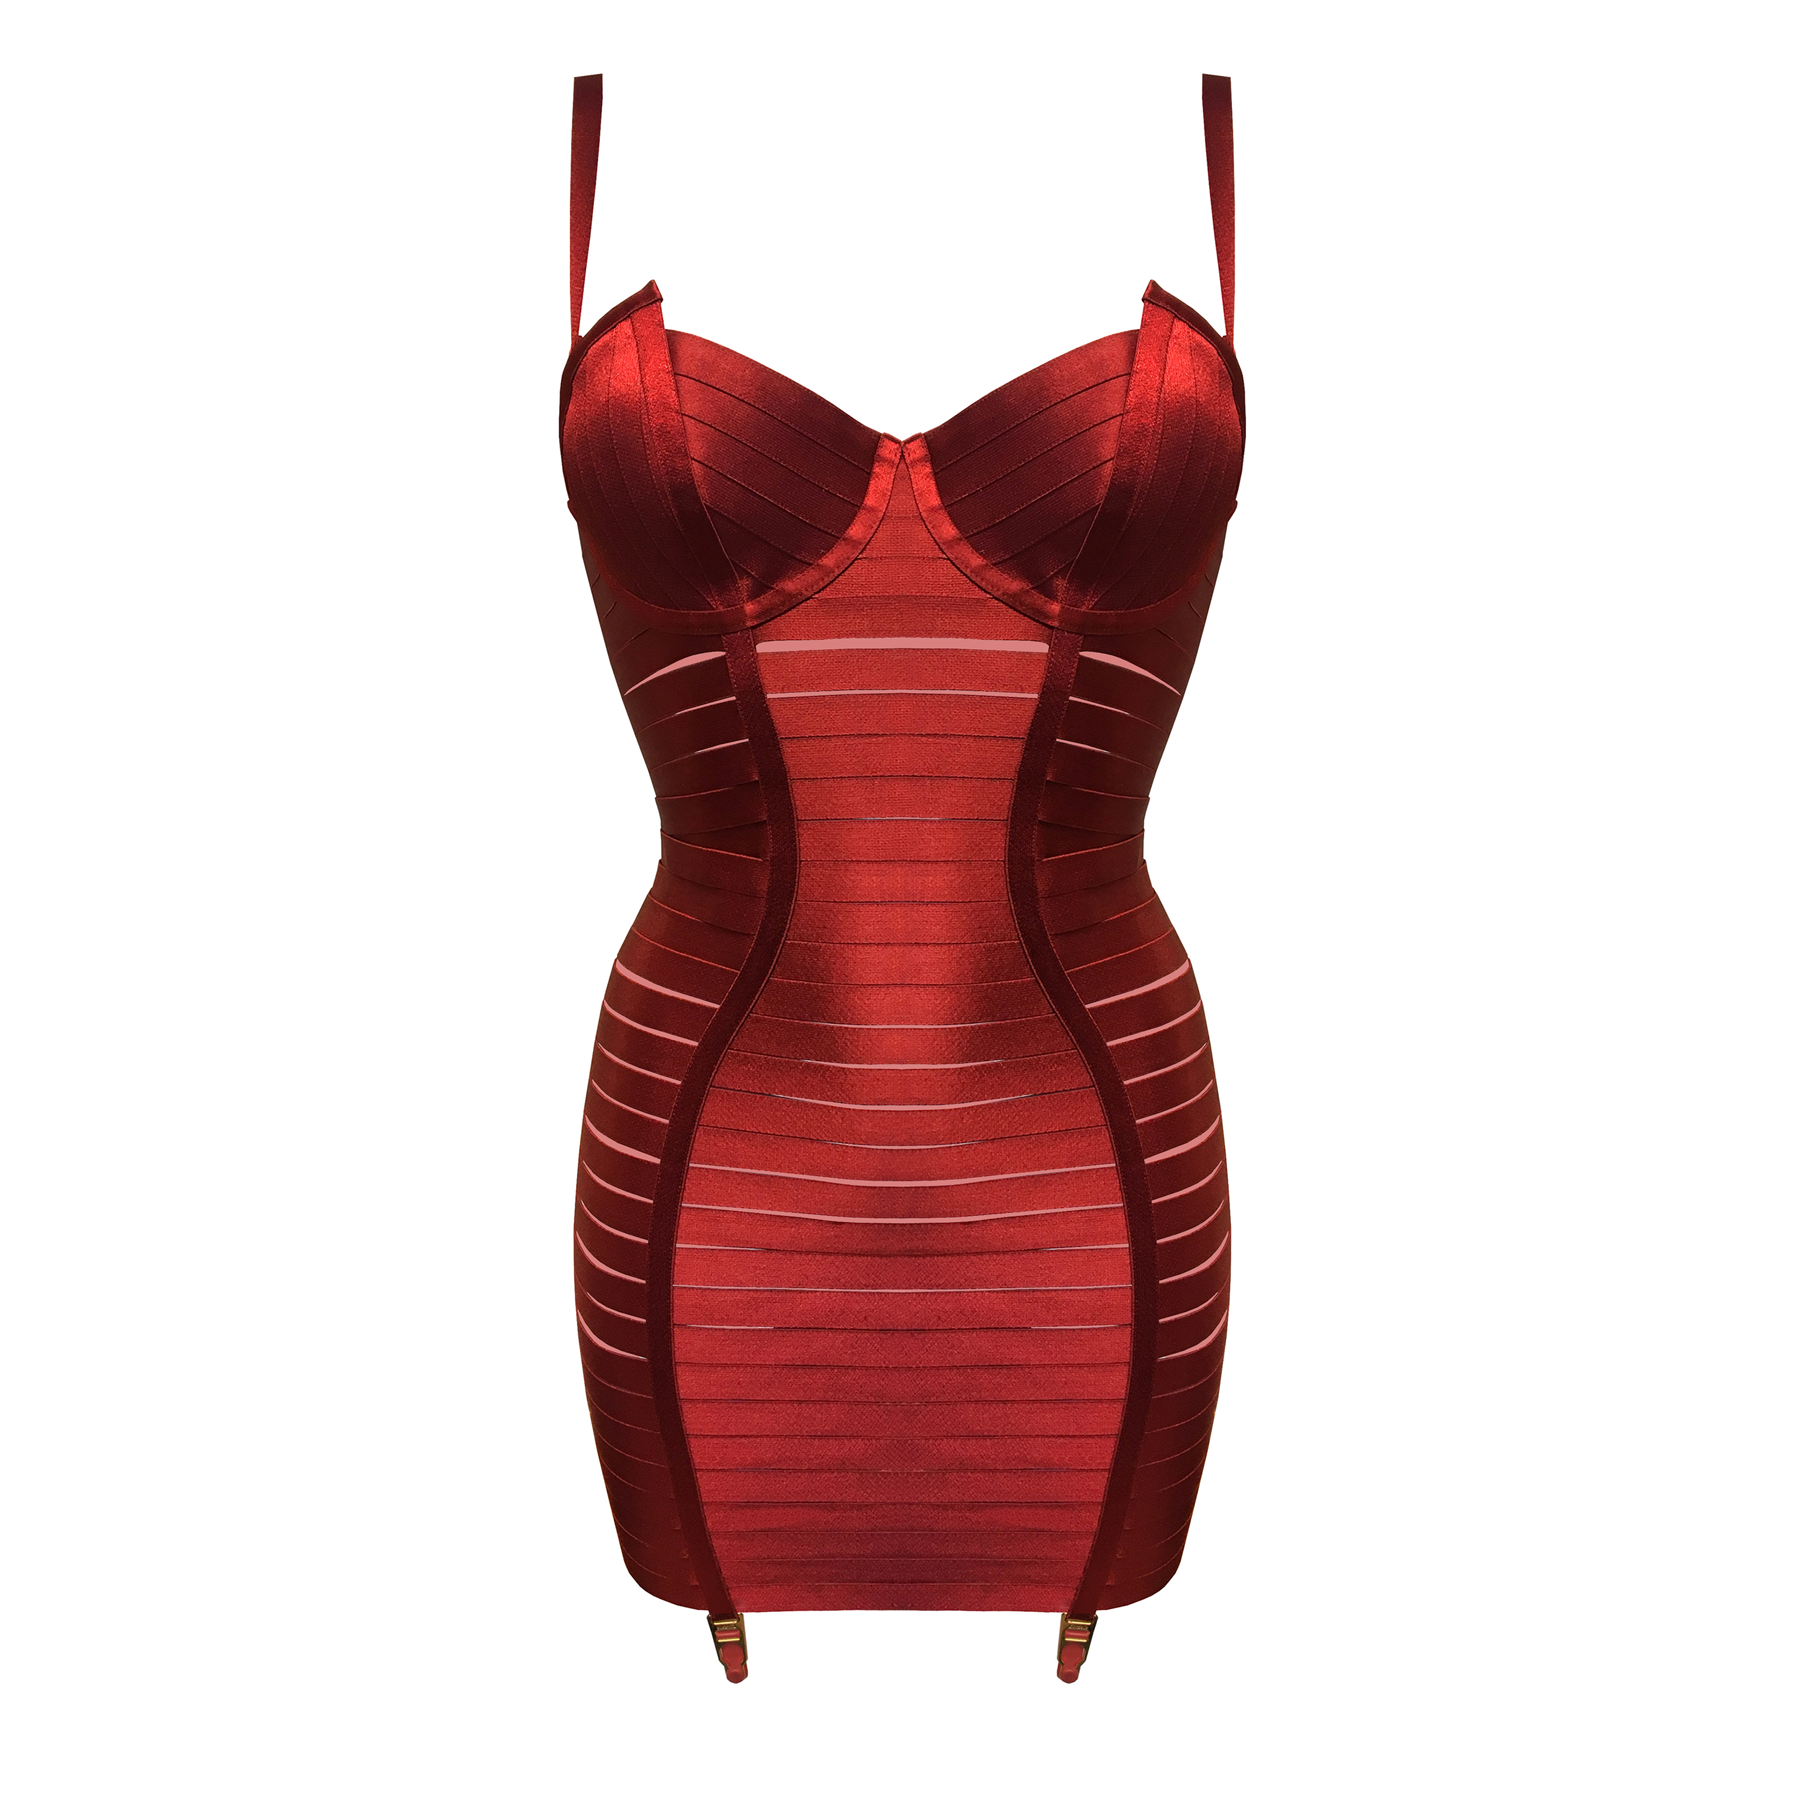 Adjustable Angela dress by Bordelle - red